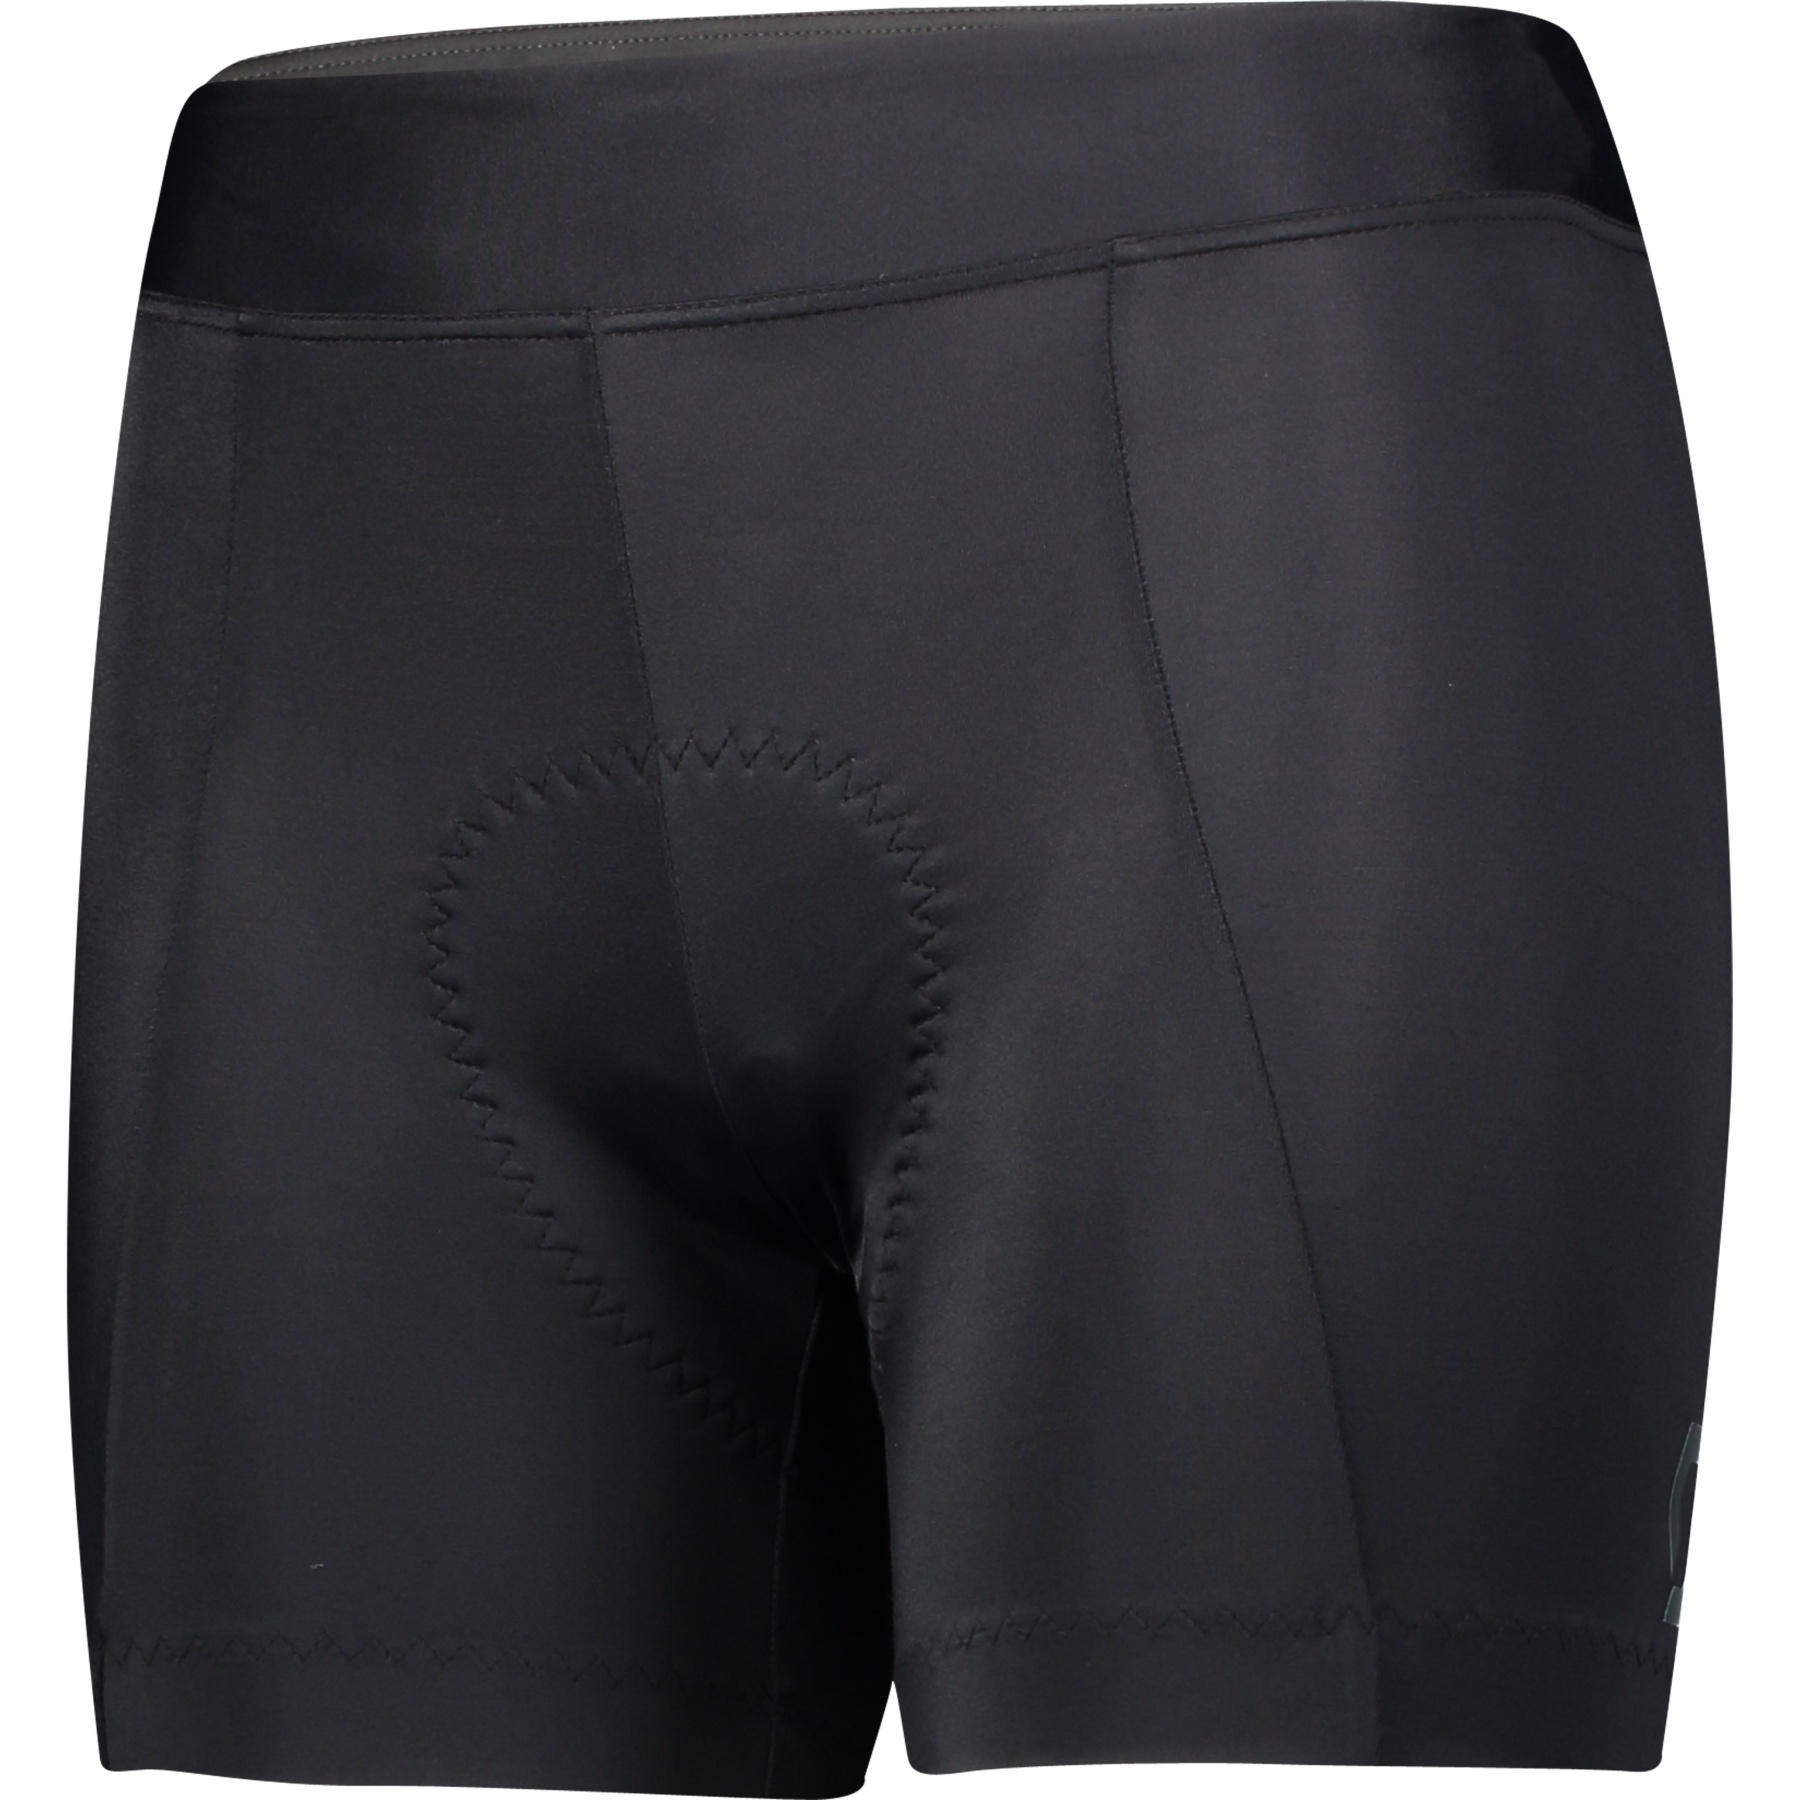 Image of SCOTT Endurance 20 ++ Women's Bike Shorts - black/dark grey